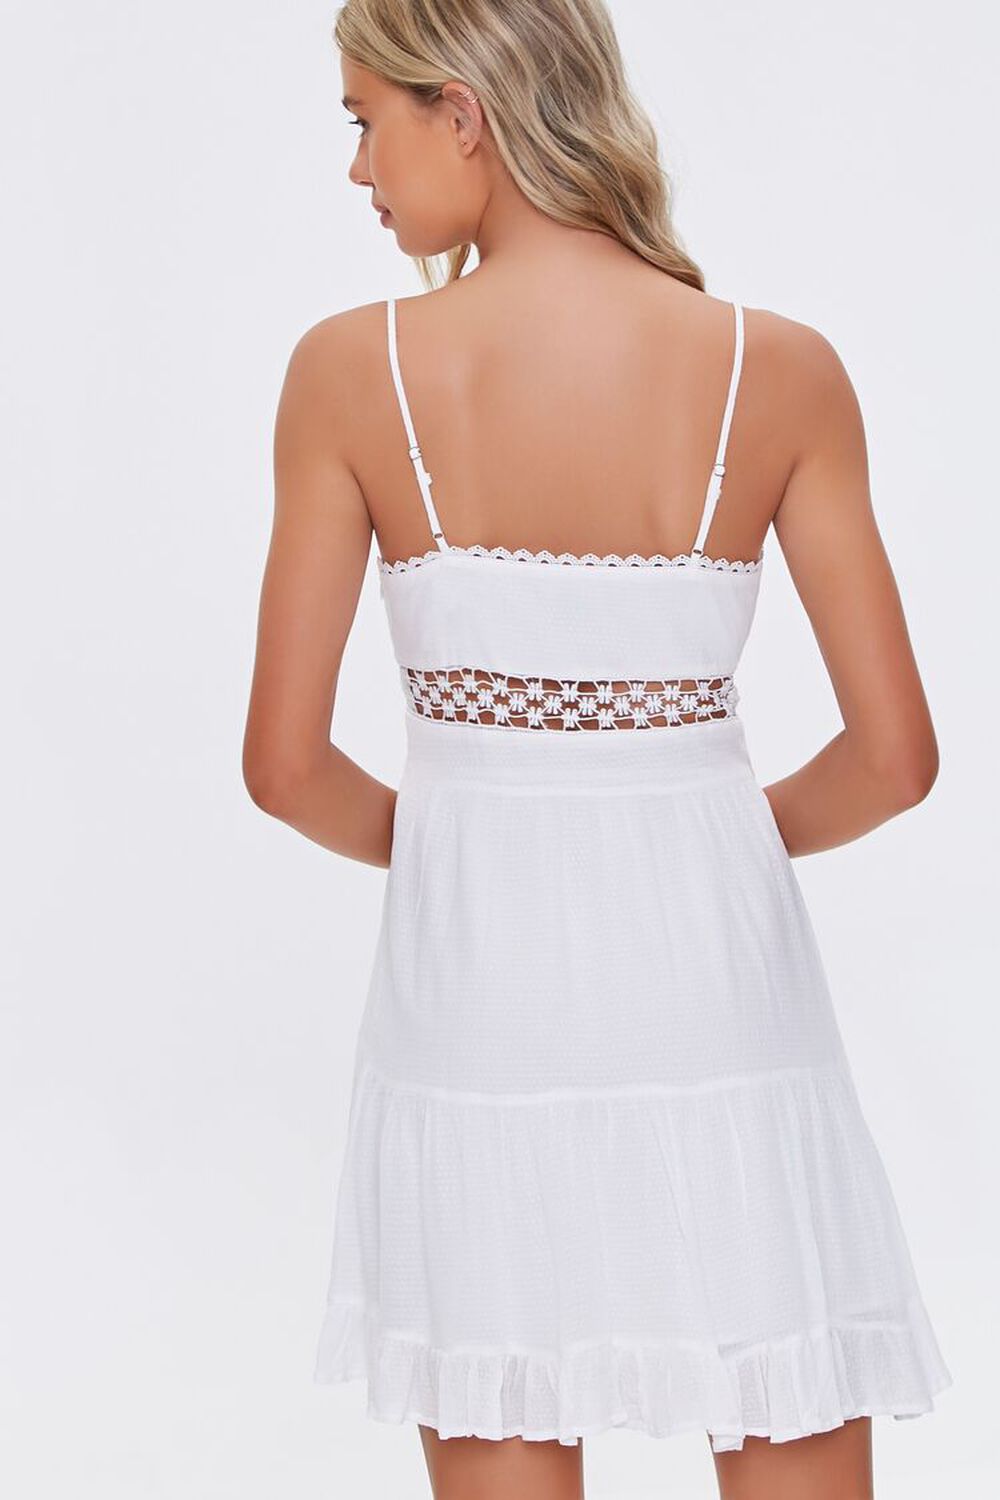 CREAM Lace-Trim Mini Dress, image 3